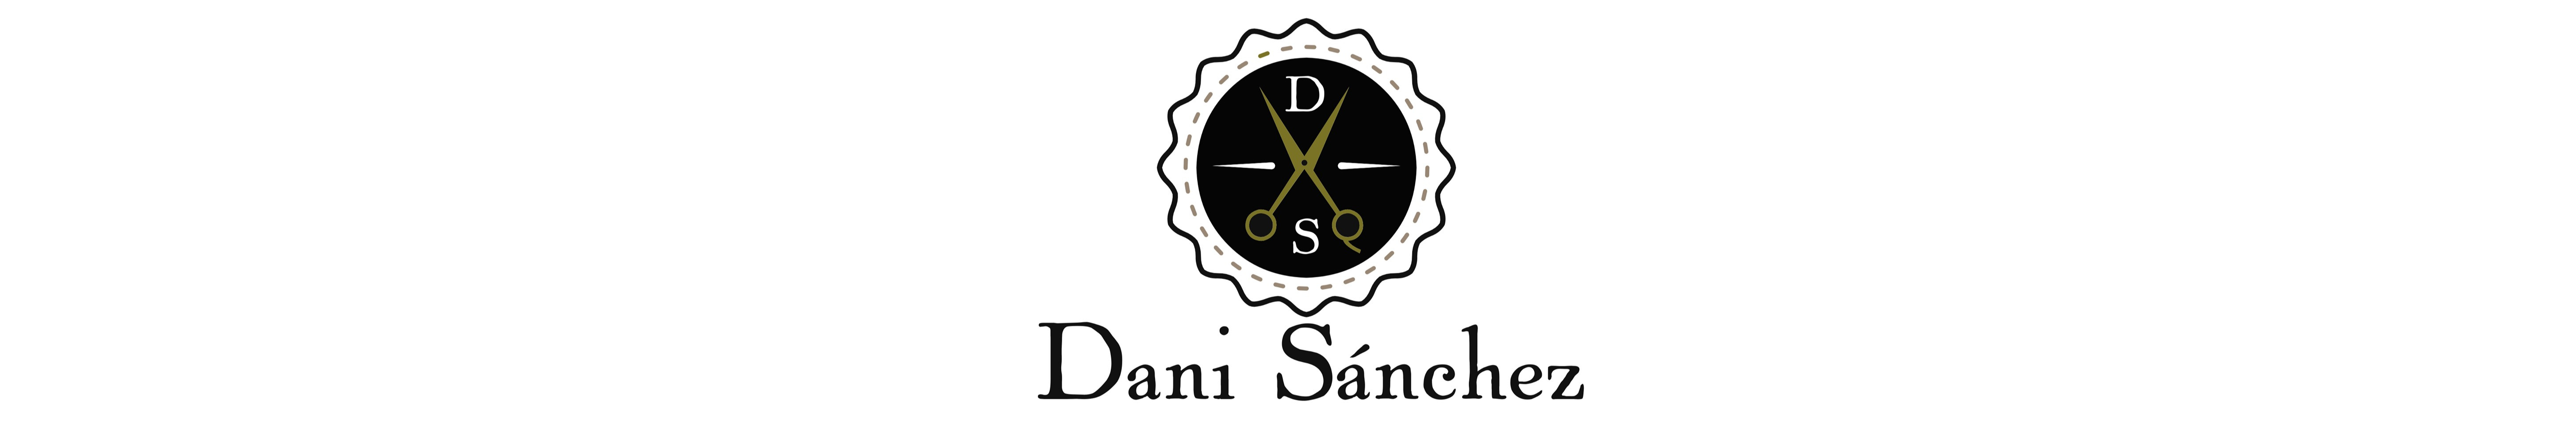 DANI Sánchez by La Navaja Barbera